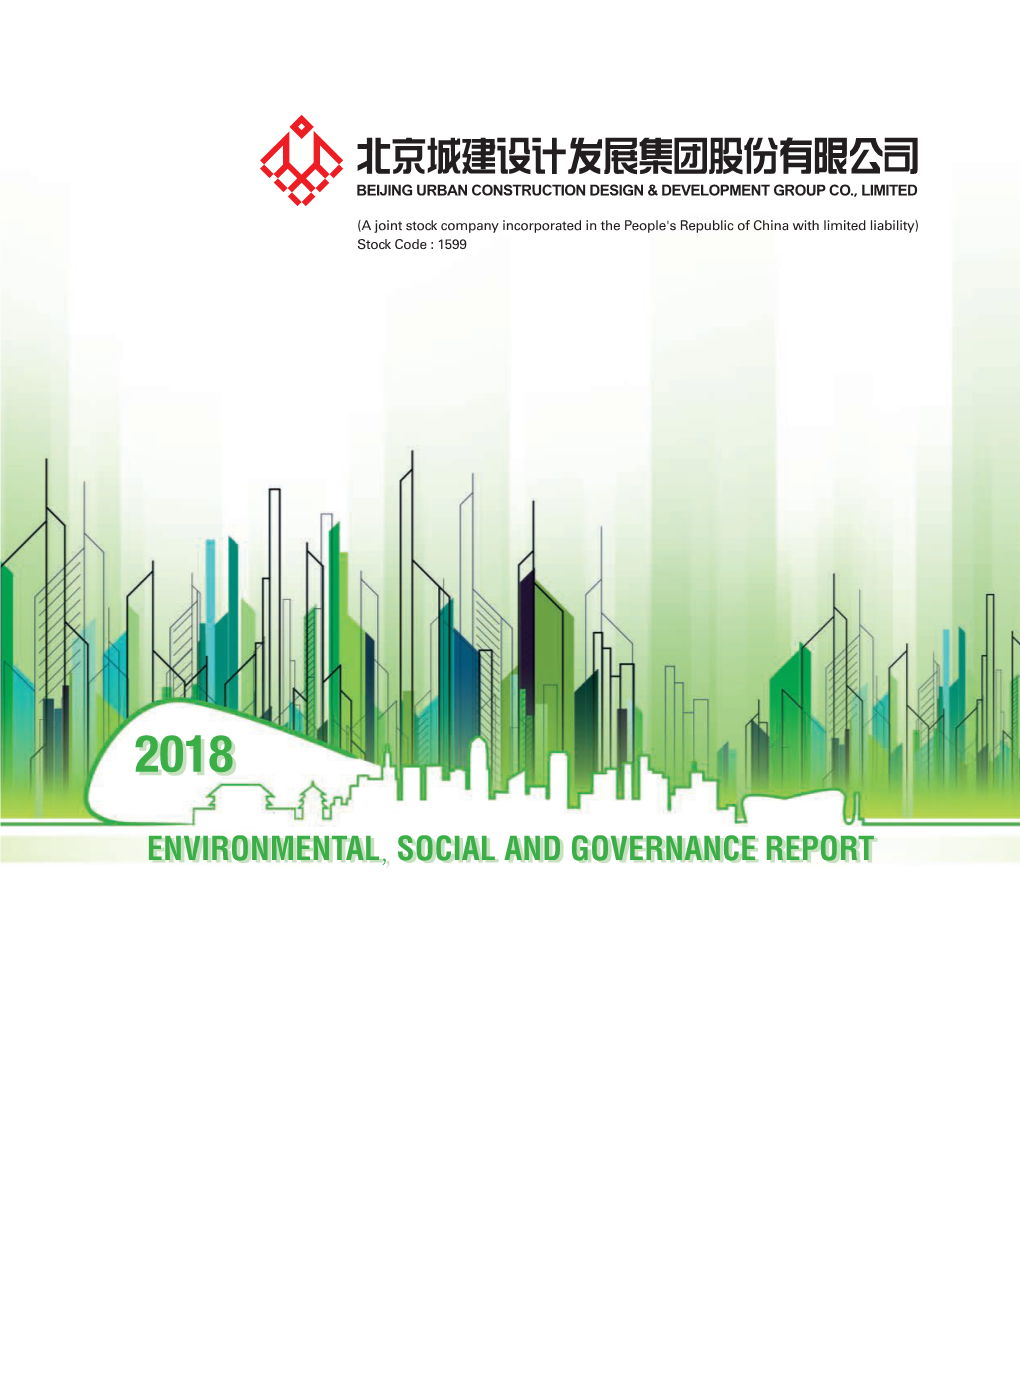 Social and Governance Report Environmental